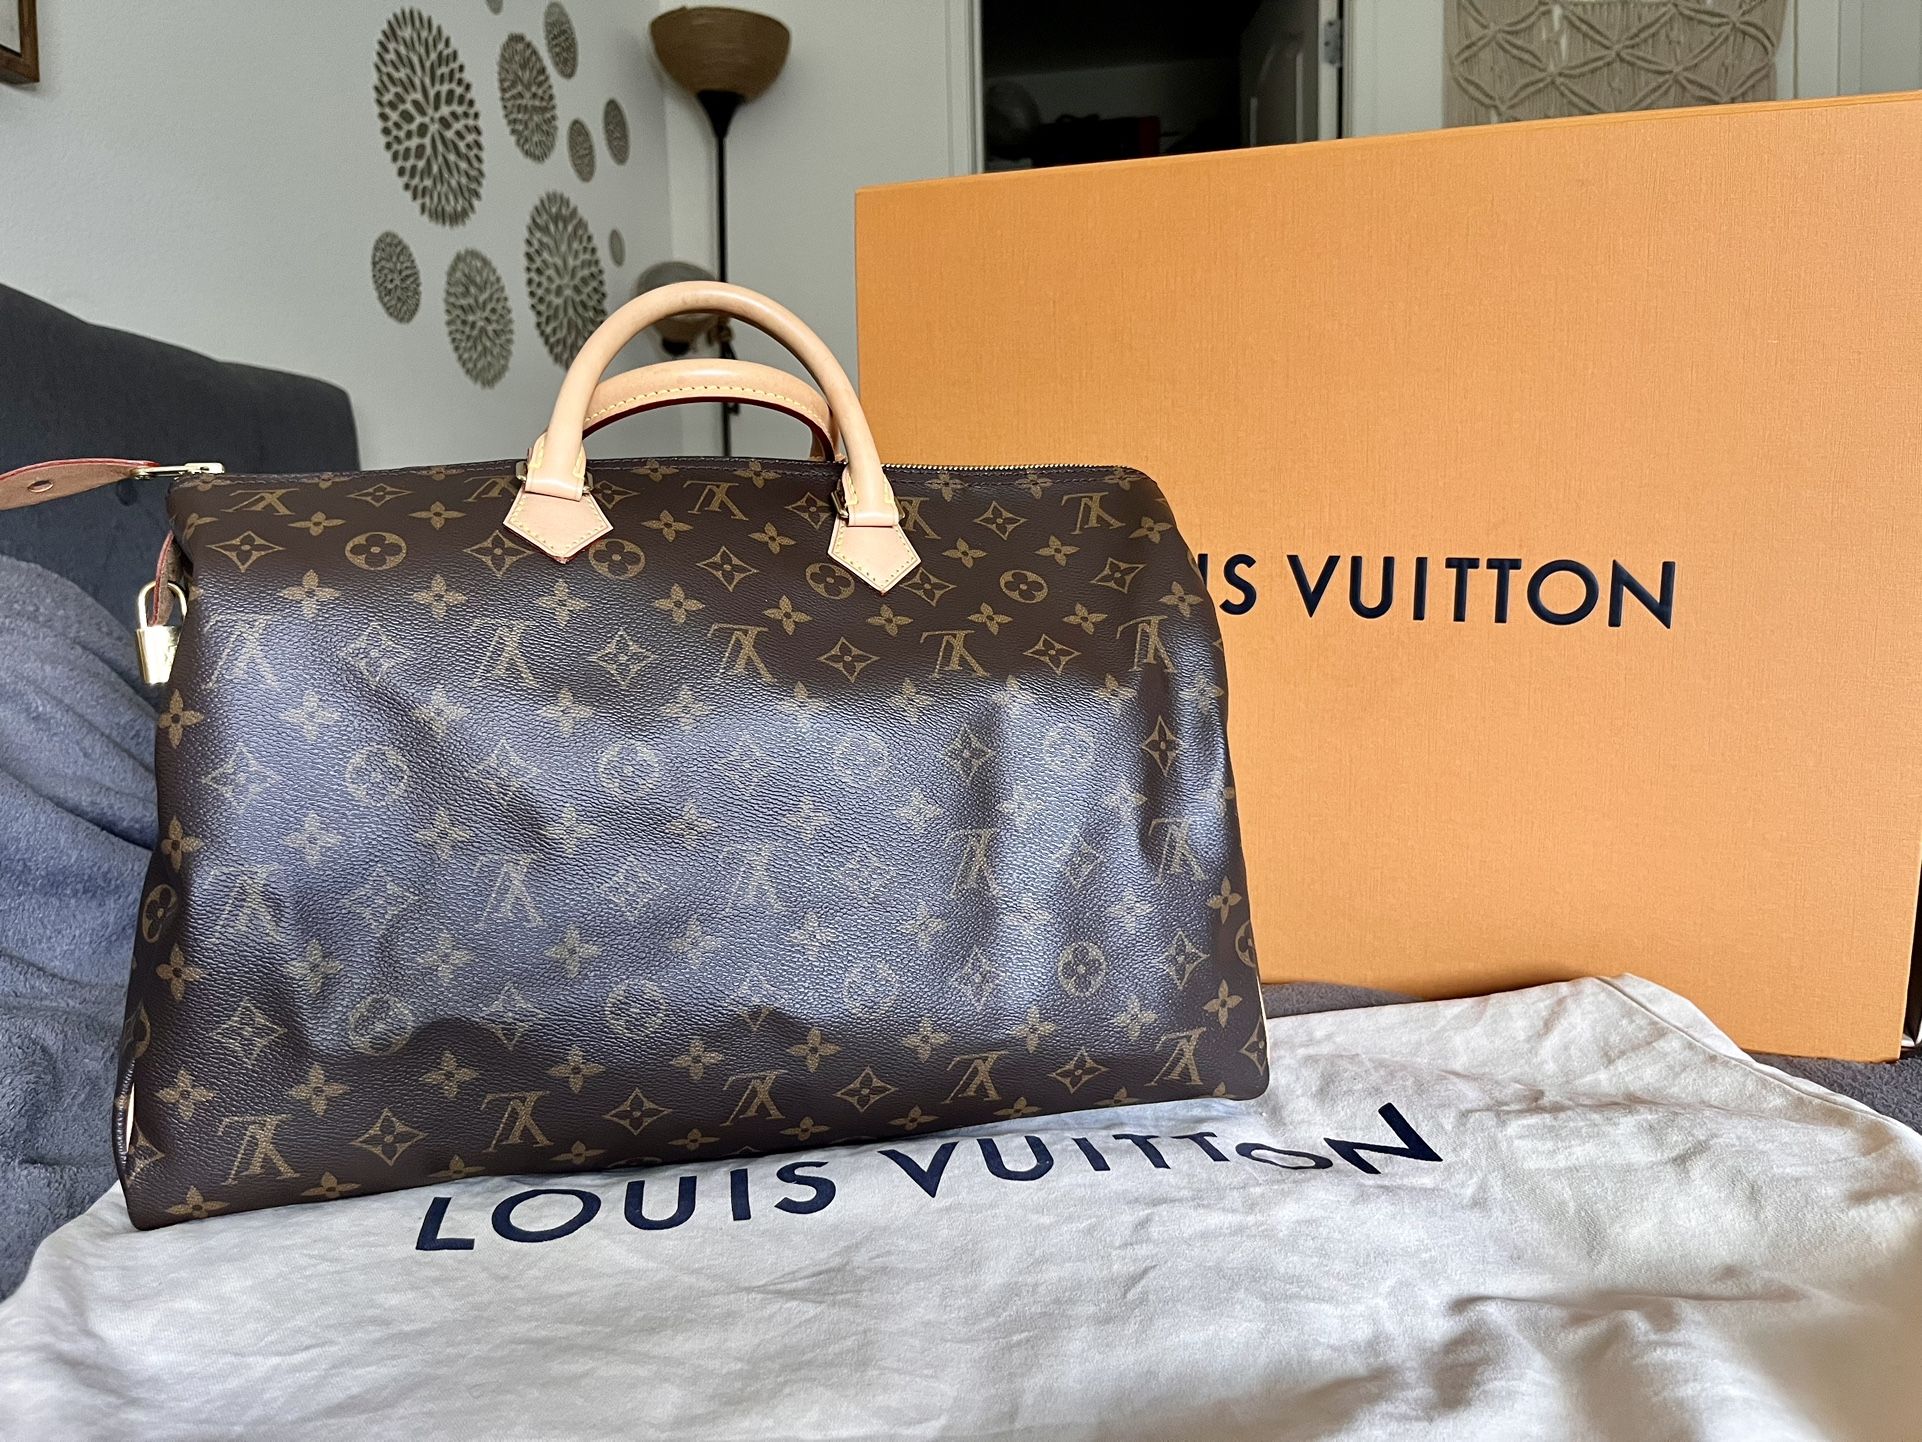 New Speedy 35 Louis Vuitton Monogram LV Bag